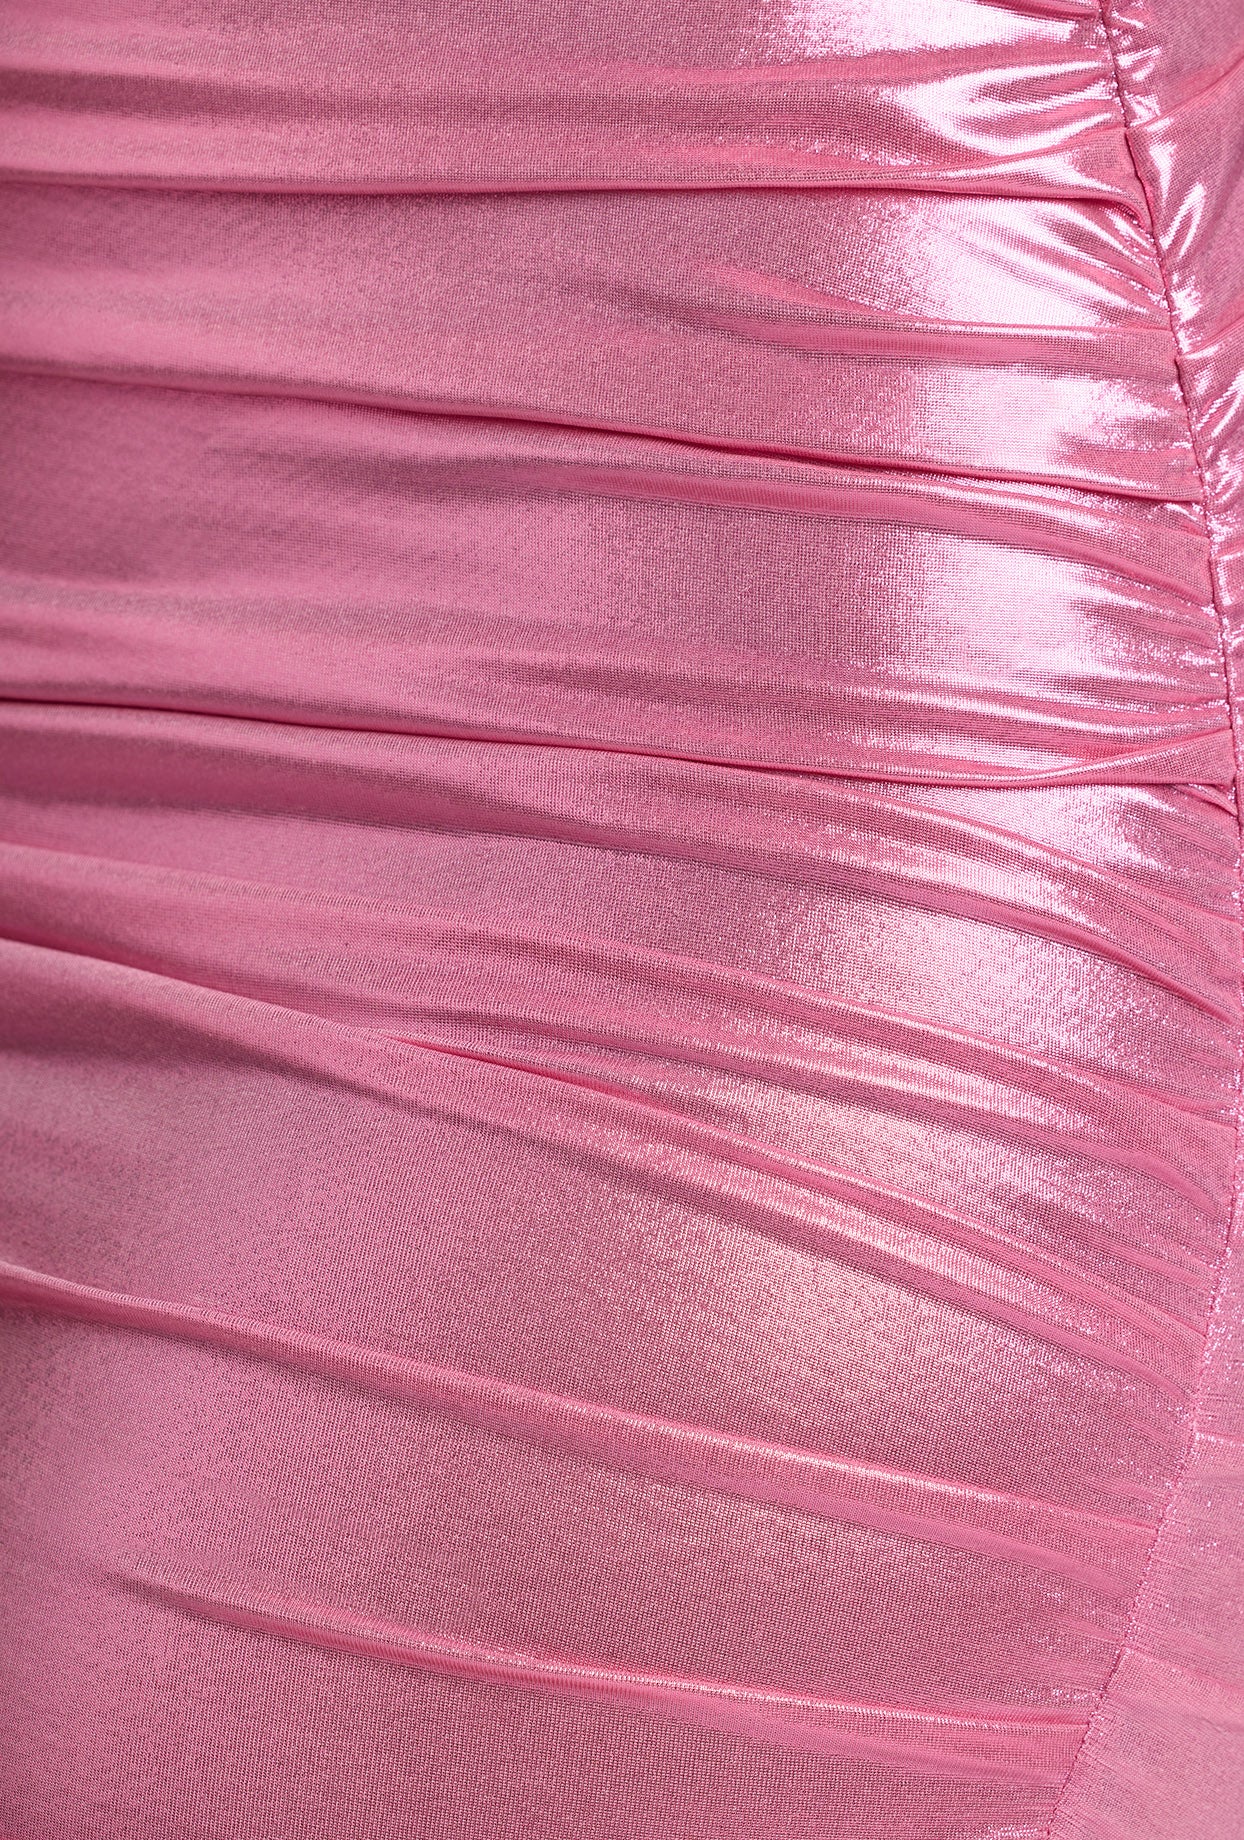 Long Sleeve Metallic Jersey Mini Dress in Rose Pink